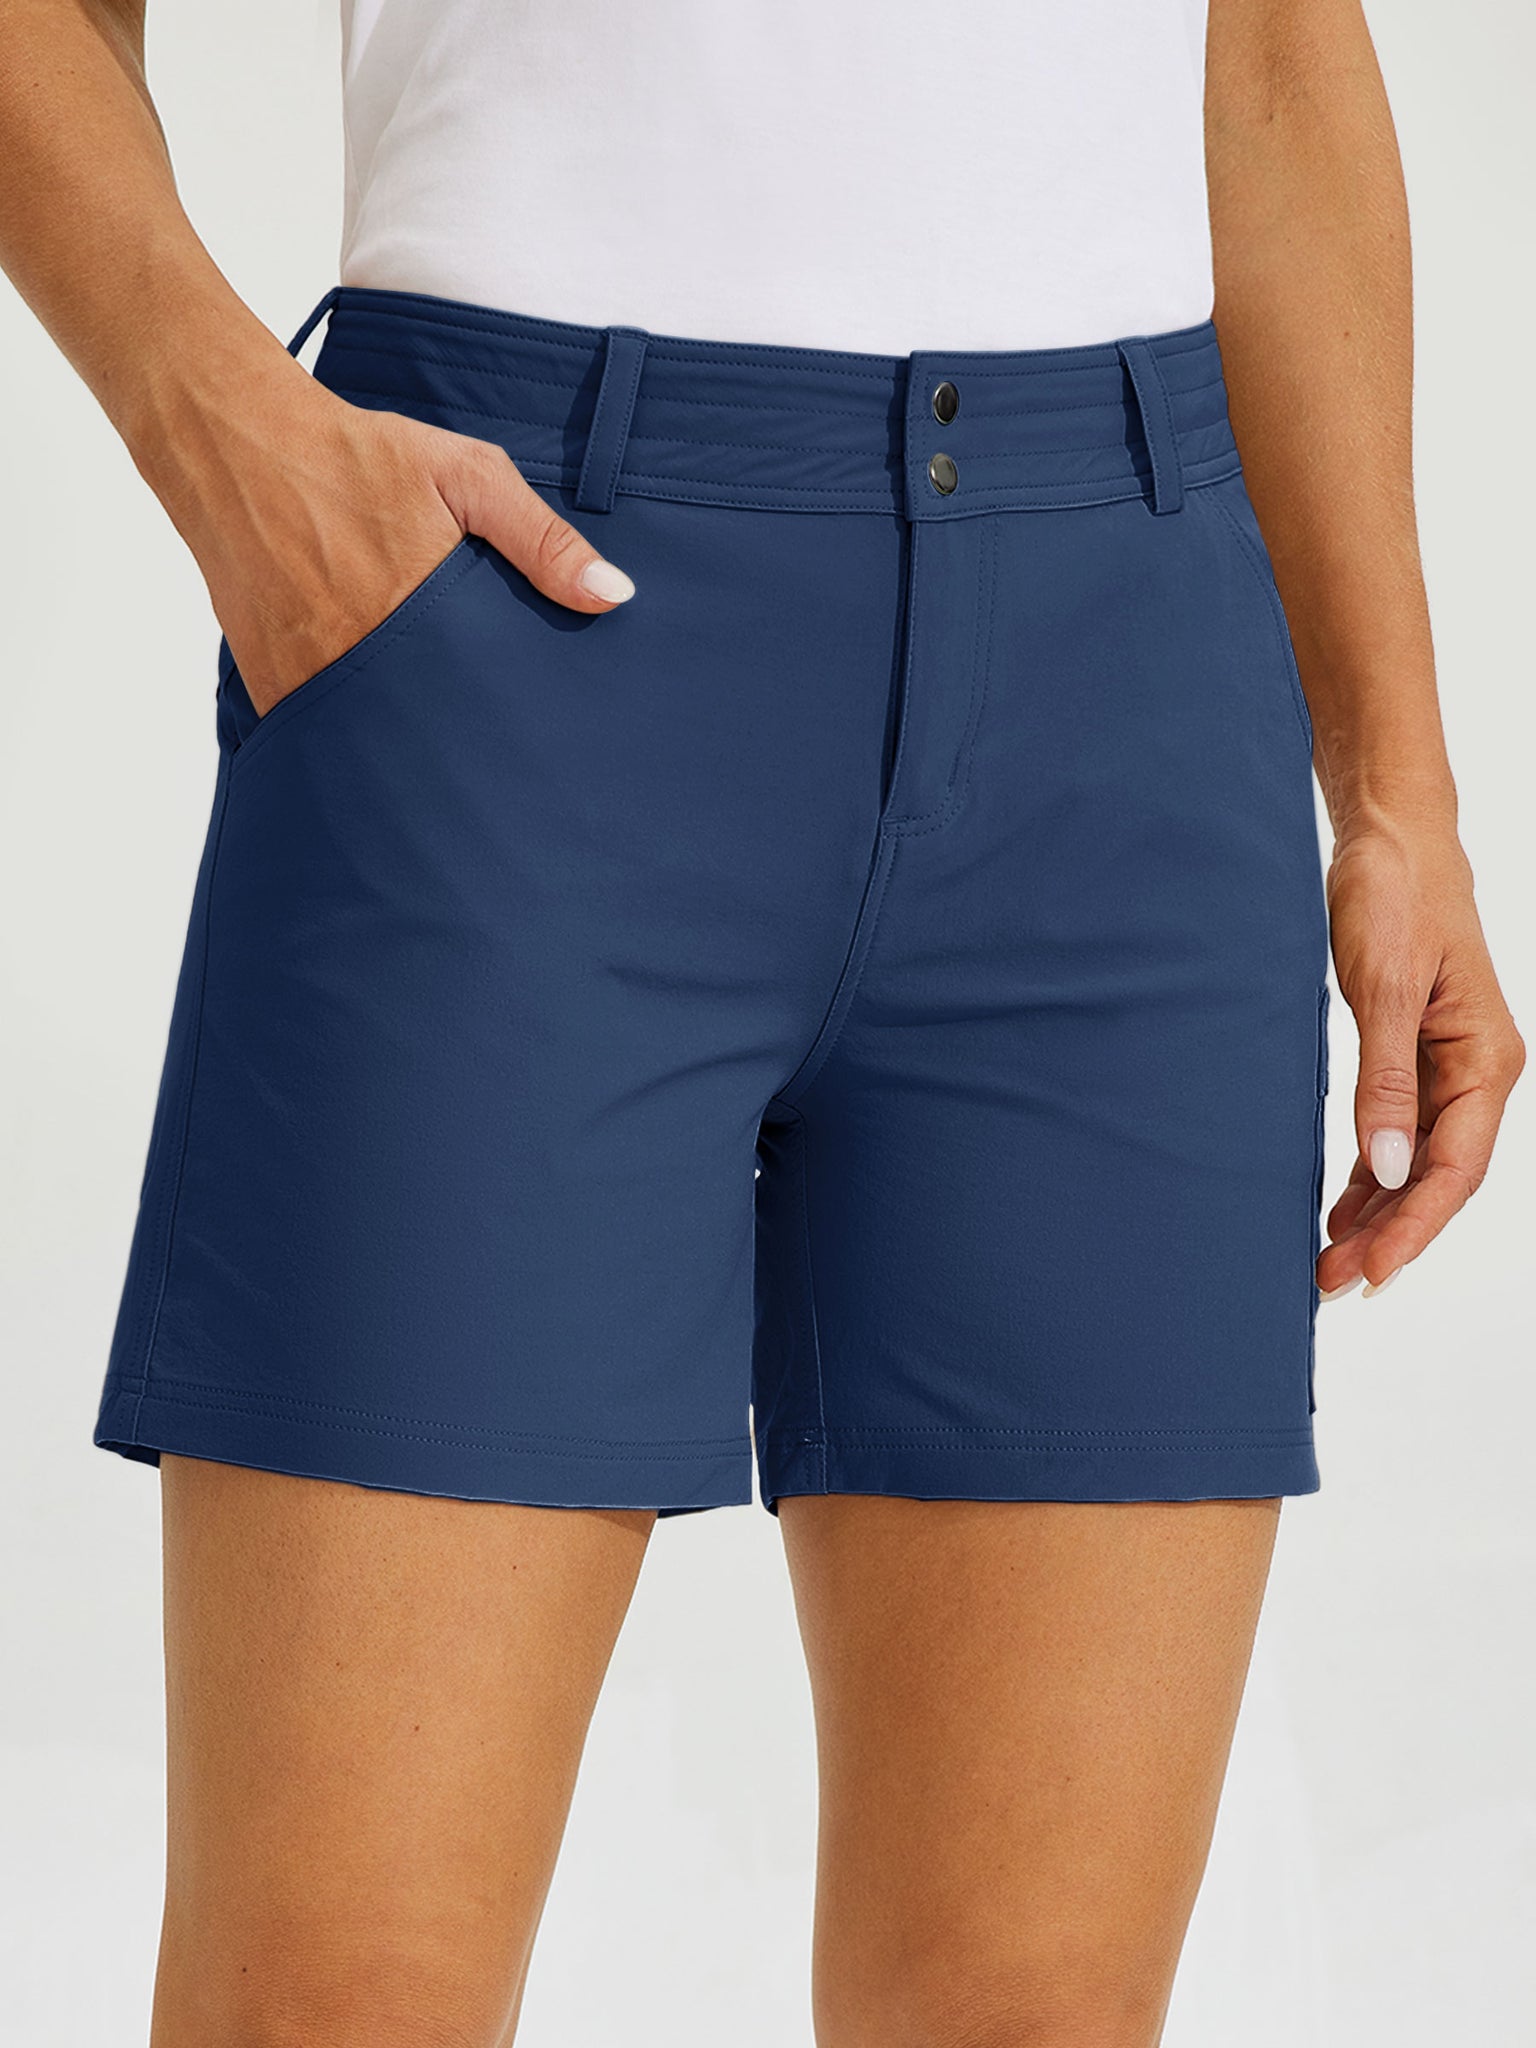 Women's Outdoor Pro Shorts 5Inch_Navy1